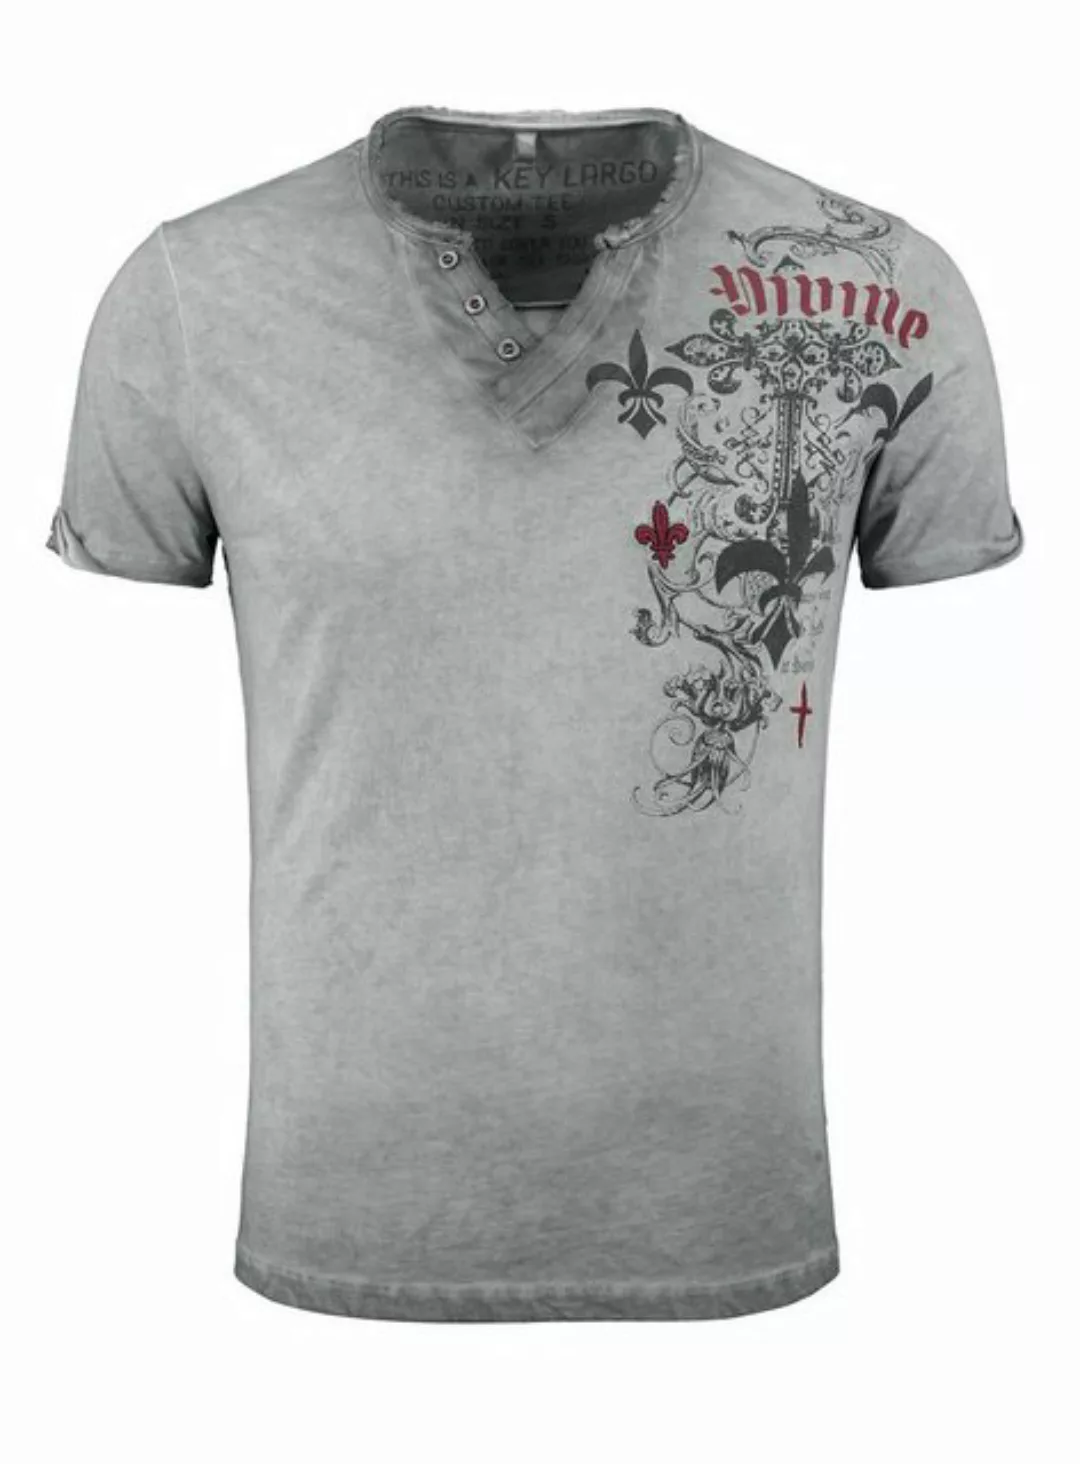 Key Largo T-Shirt T-Shirt Knight Print Motiv vintage Look MT00287 V-Auschni günstig online kaufen